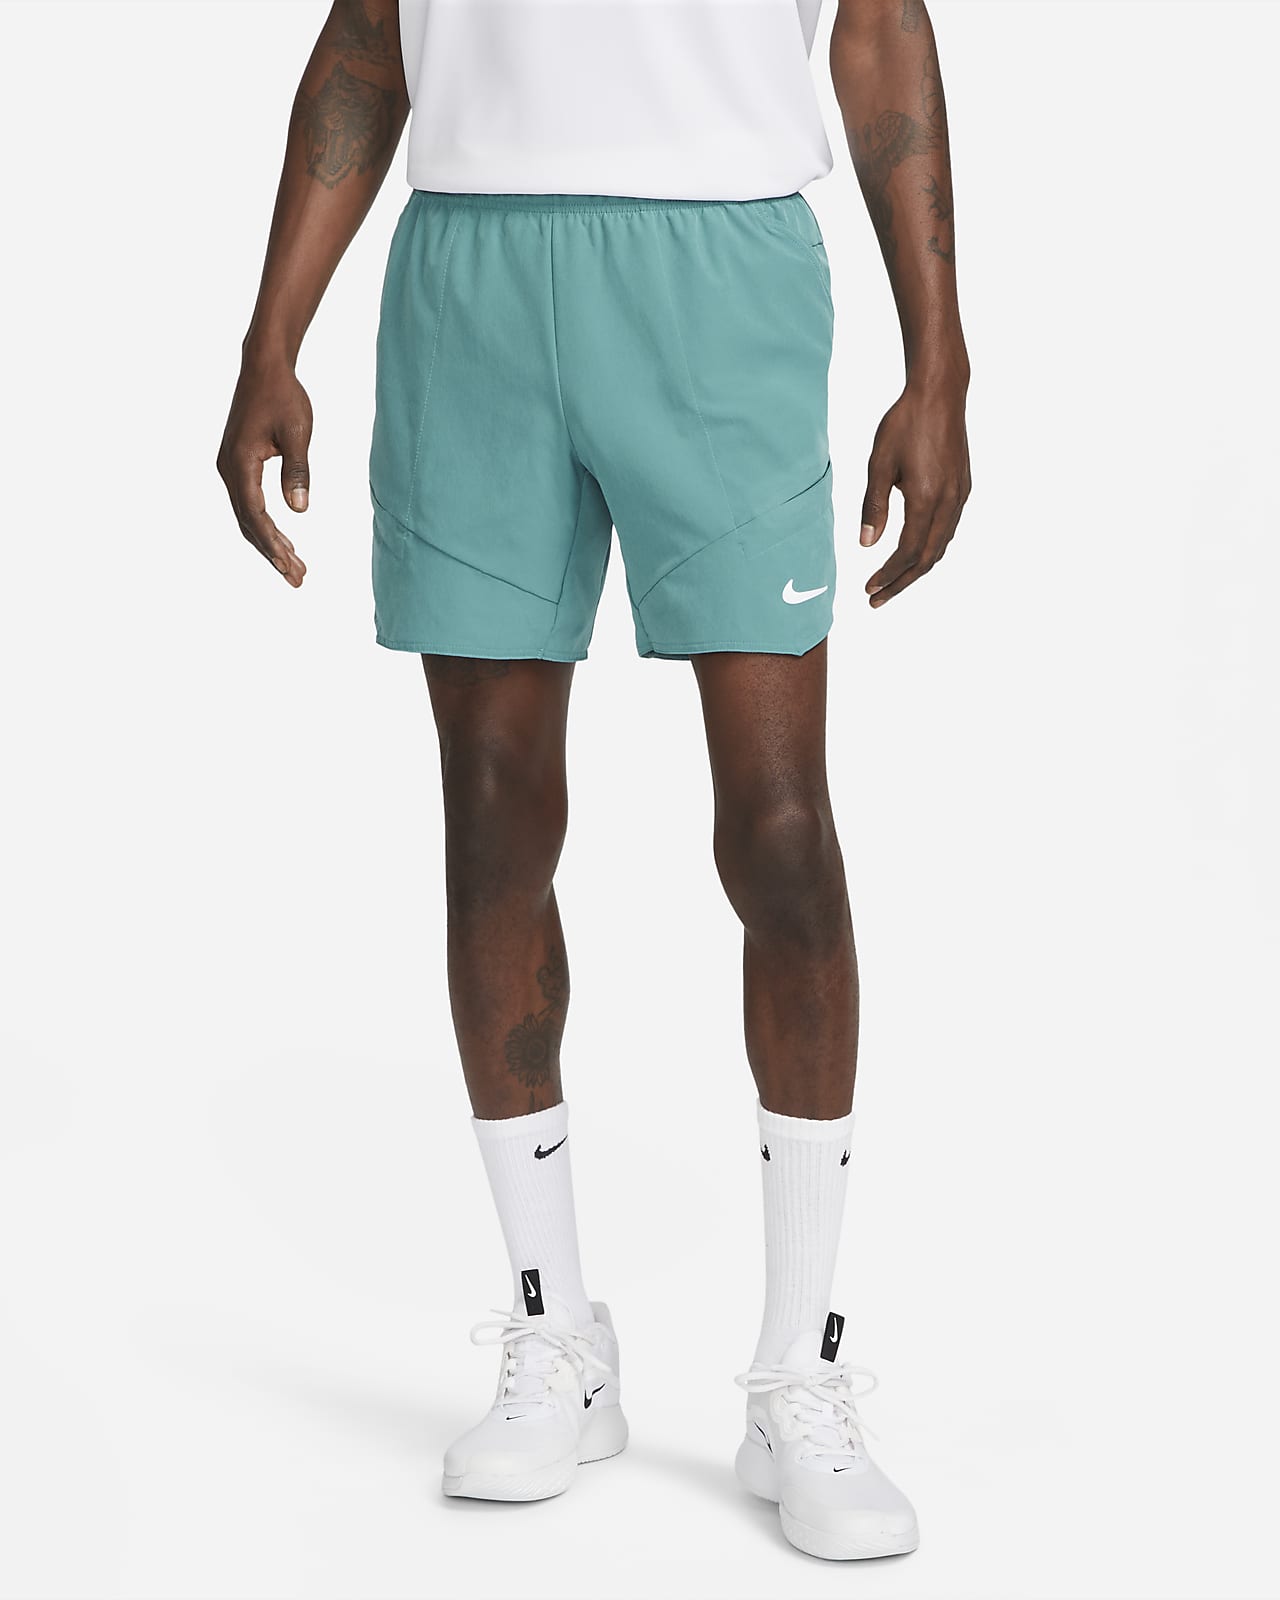 NikeCourt Dri FIT Advantage Men #39 s 7 quot Tennis Shorts Nike com